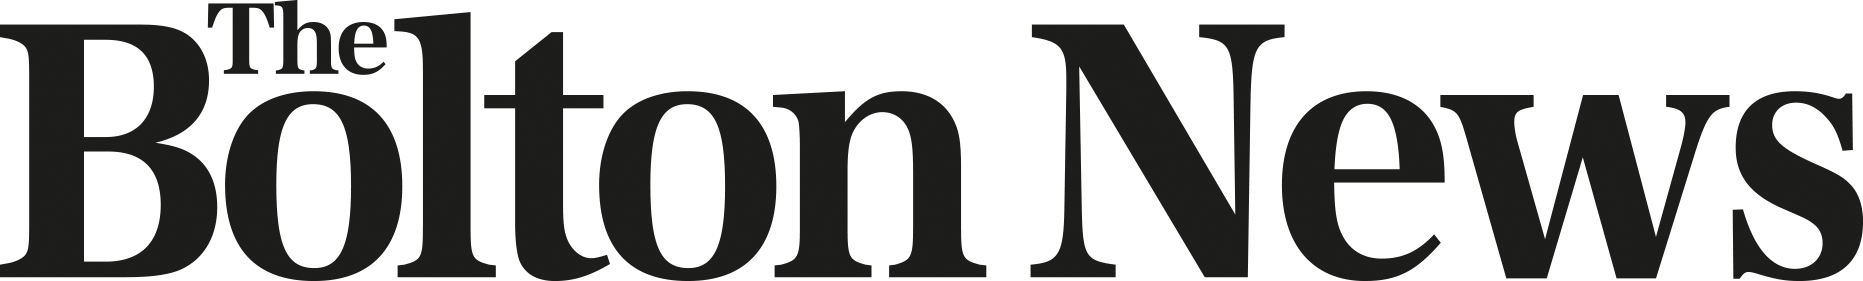 The Bolton News Logo